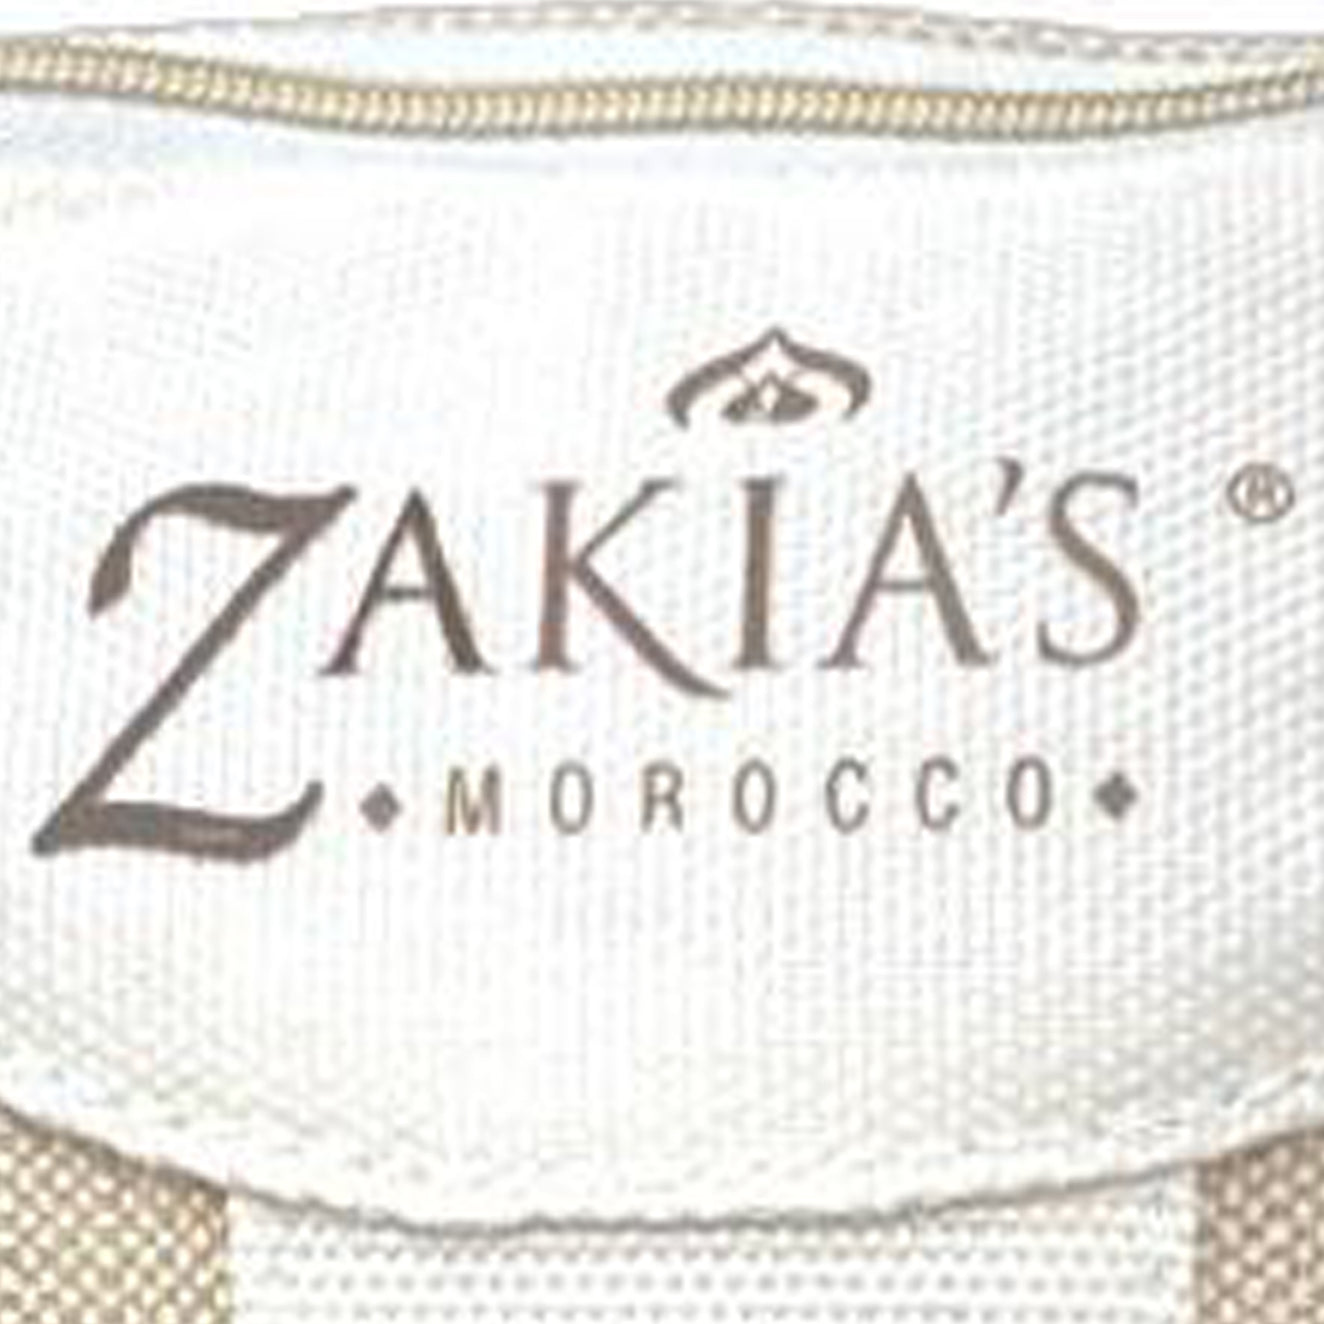 Zakia's Morocco logo on cosmetic bag